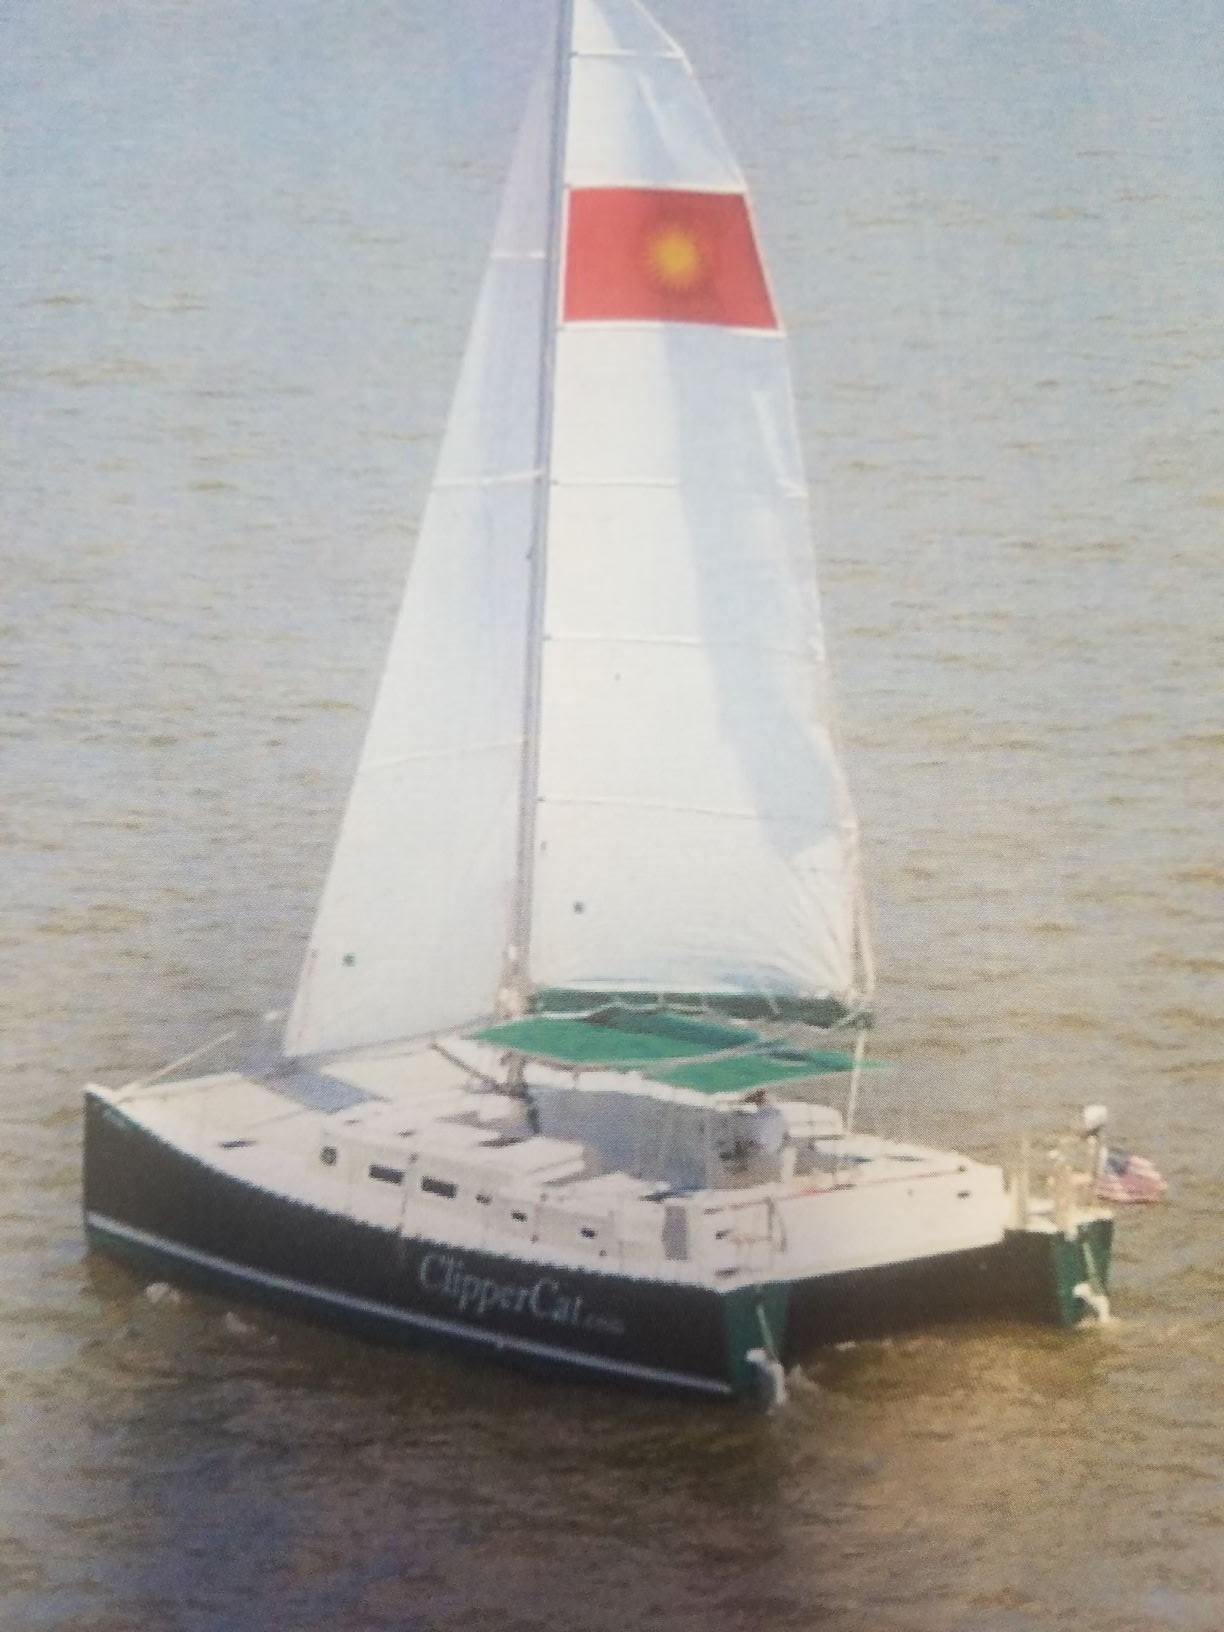 2002 catamaran clipper cat 35, edgewater maryland - boats.com